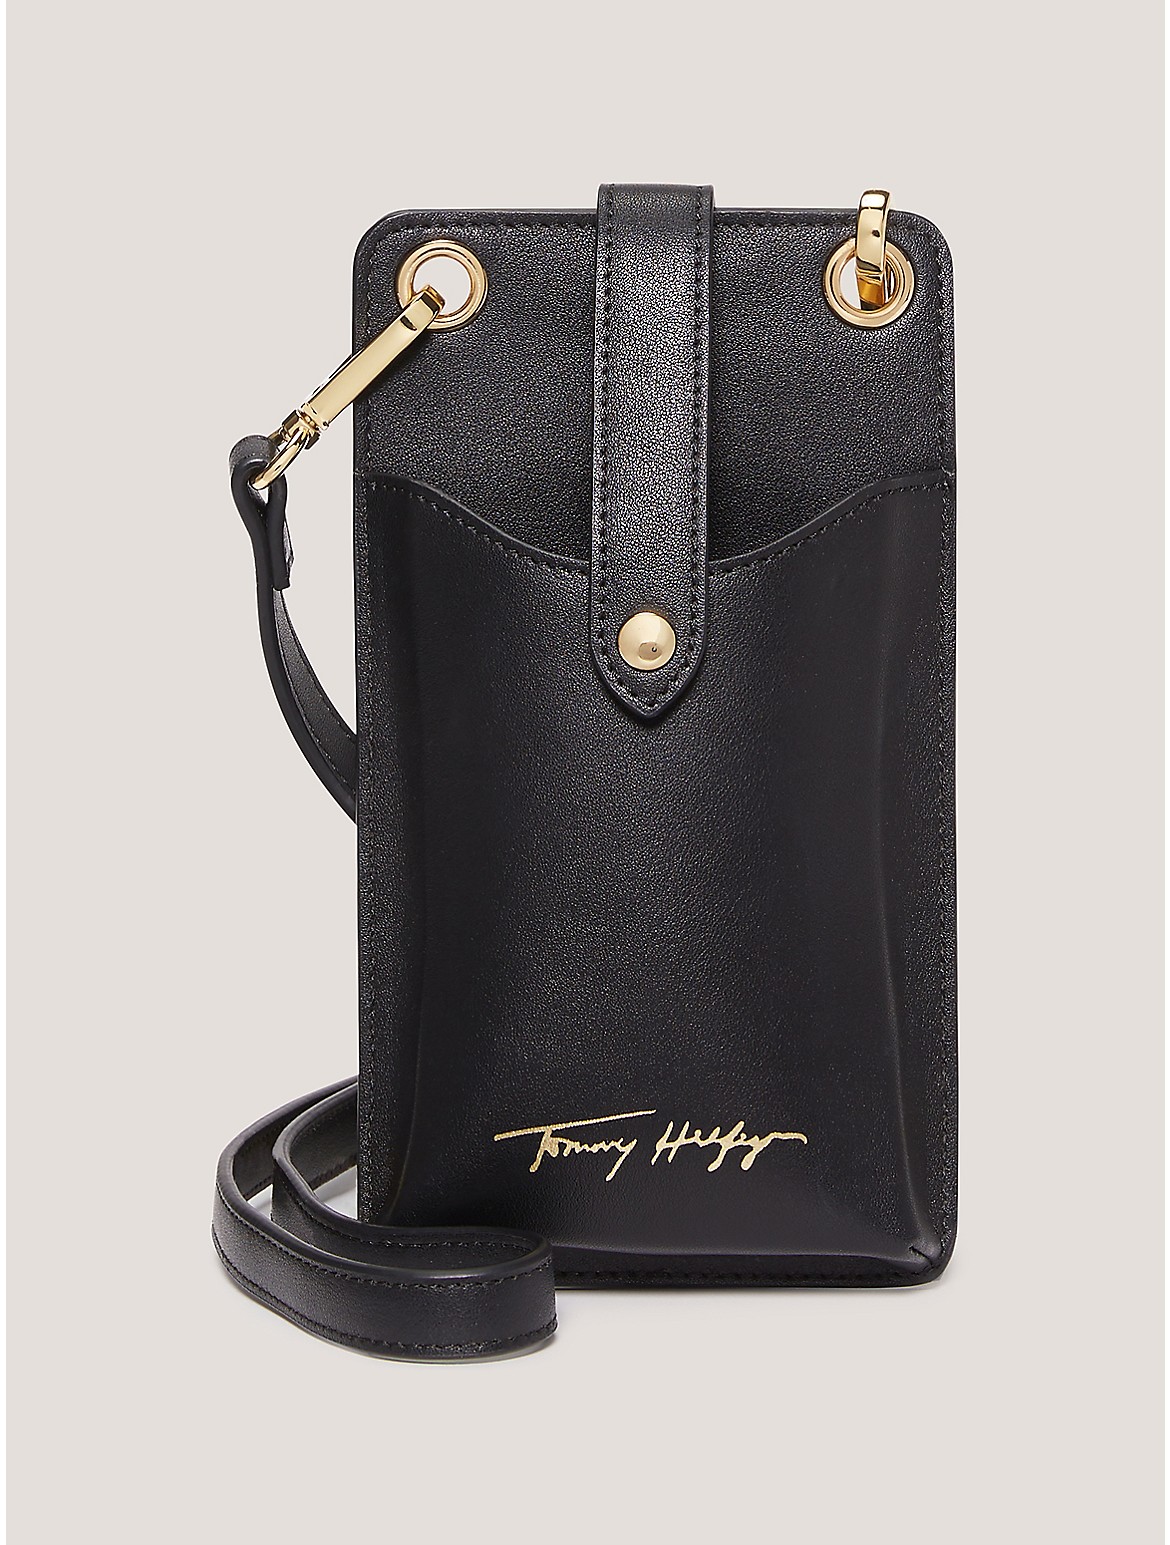 Tommy Hilfiger Women's Phone Crossbody Bag - Black